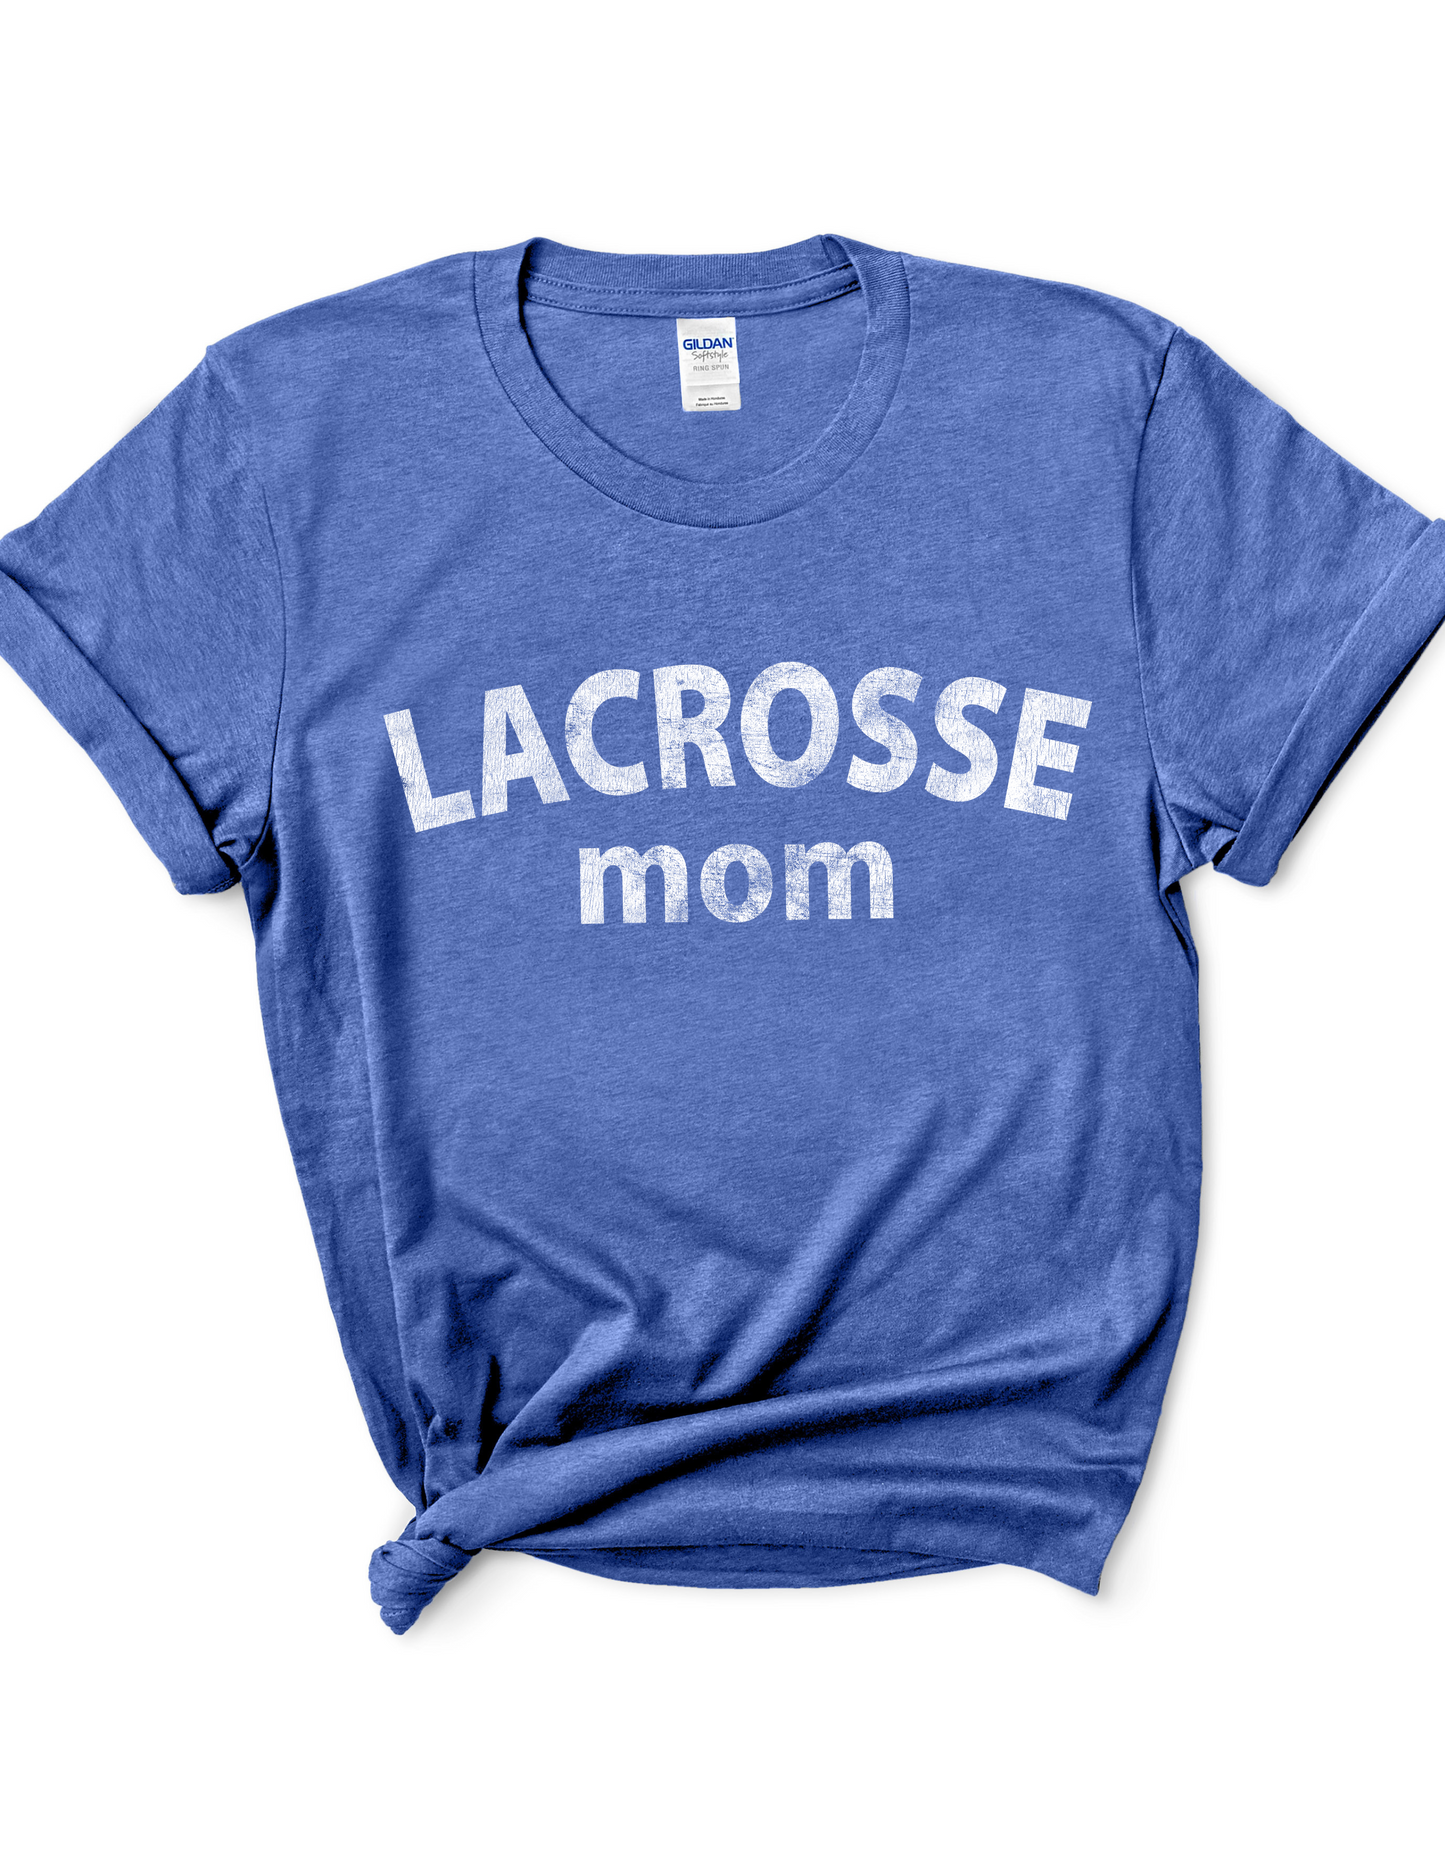 Mom Era - Lacrosse